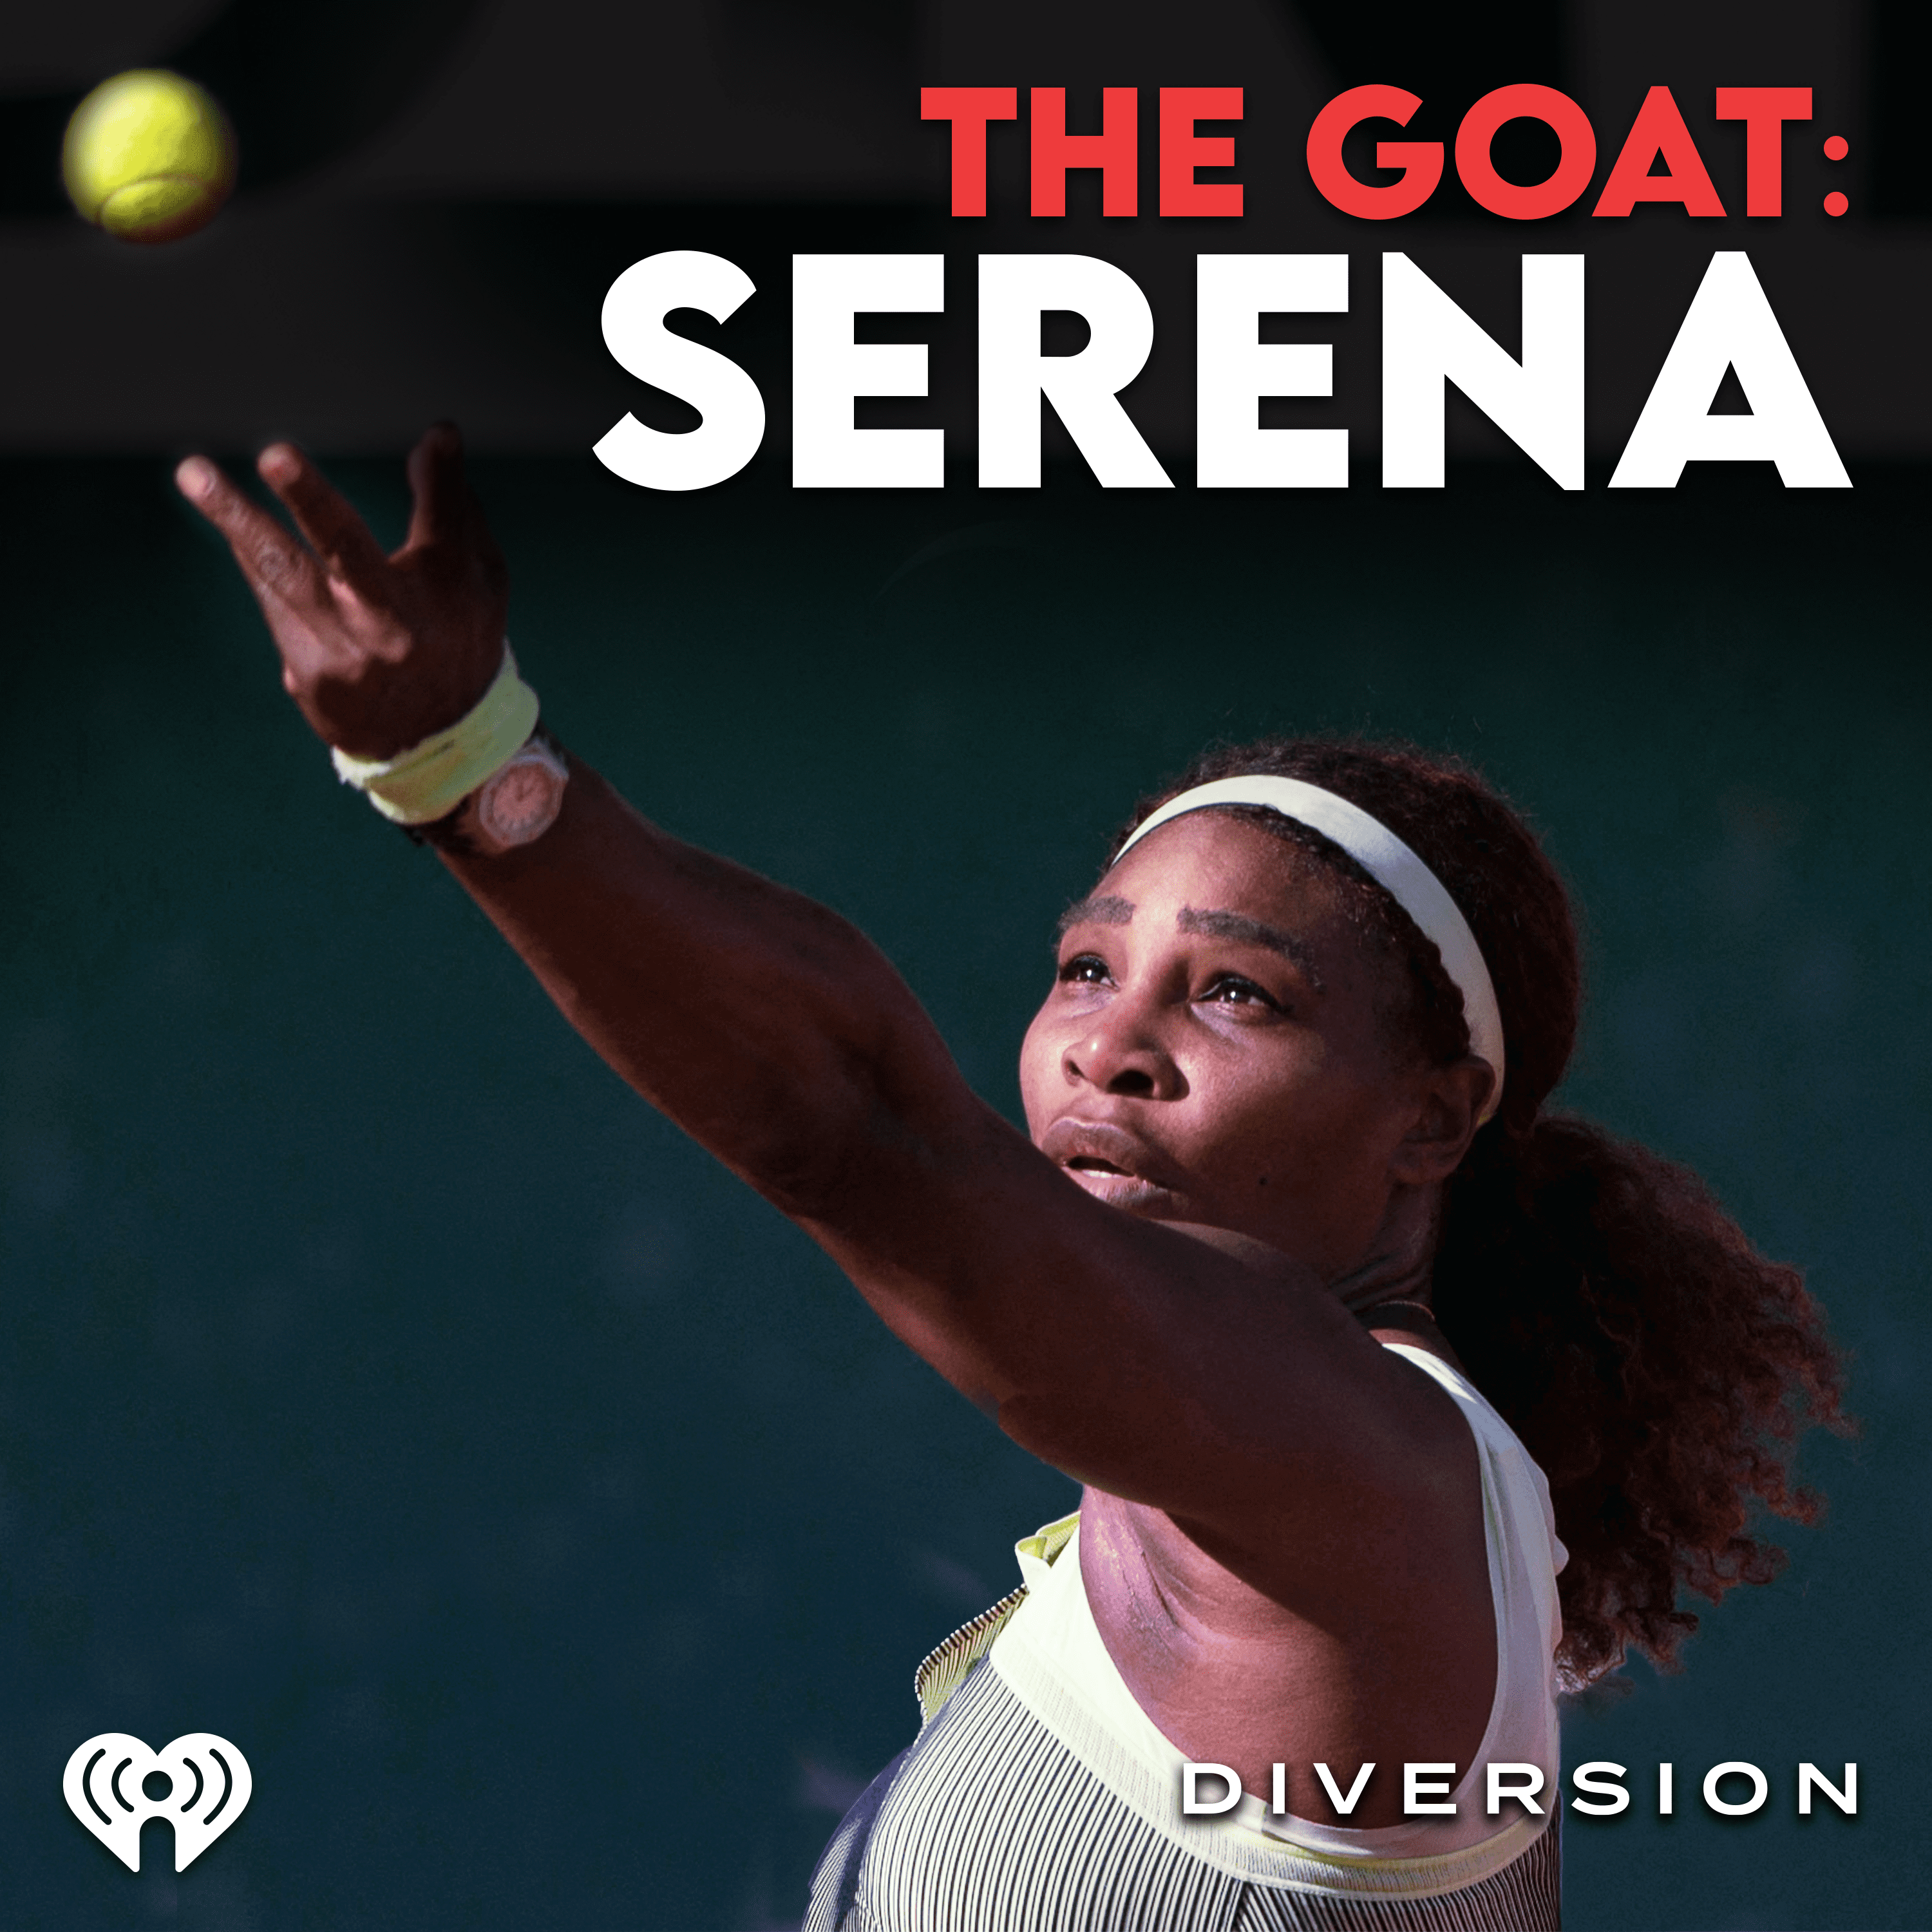 Trailer: The GOAT: Serena Williams - Show art